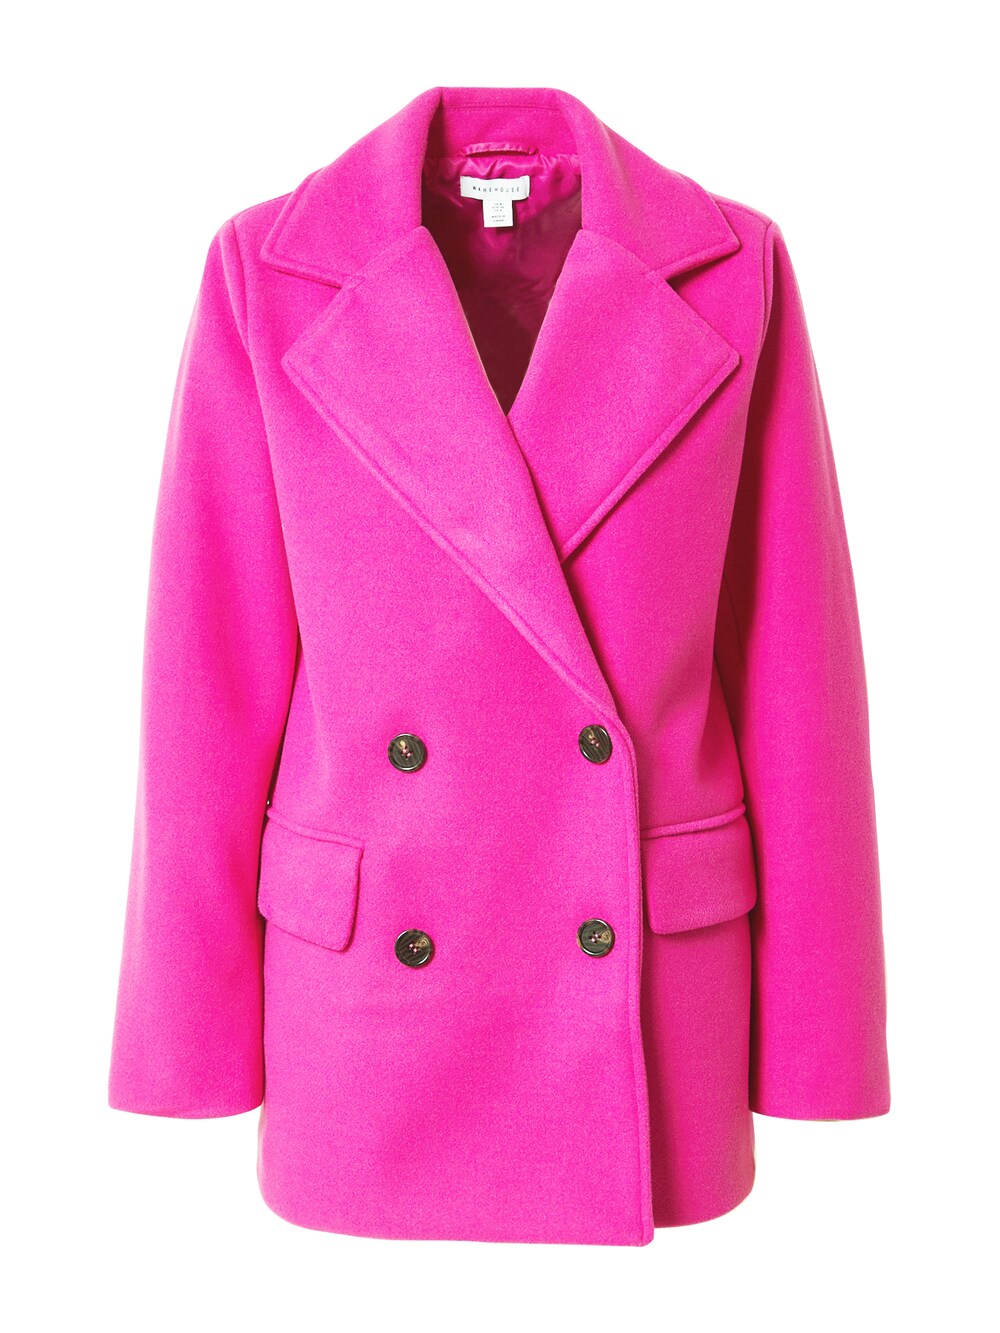 Межсезонное пальто Warehouse, розовый межсезонное пальто warehouse нюд